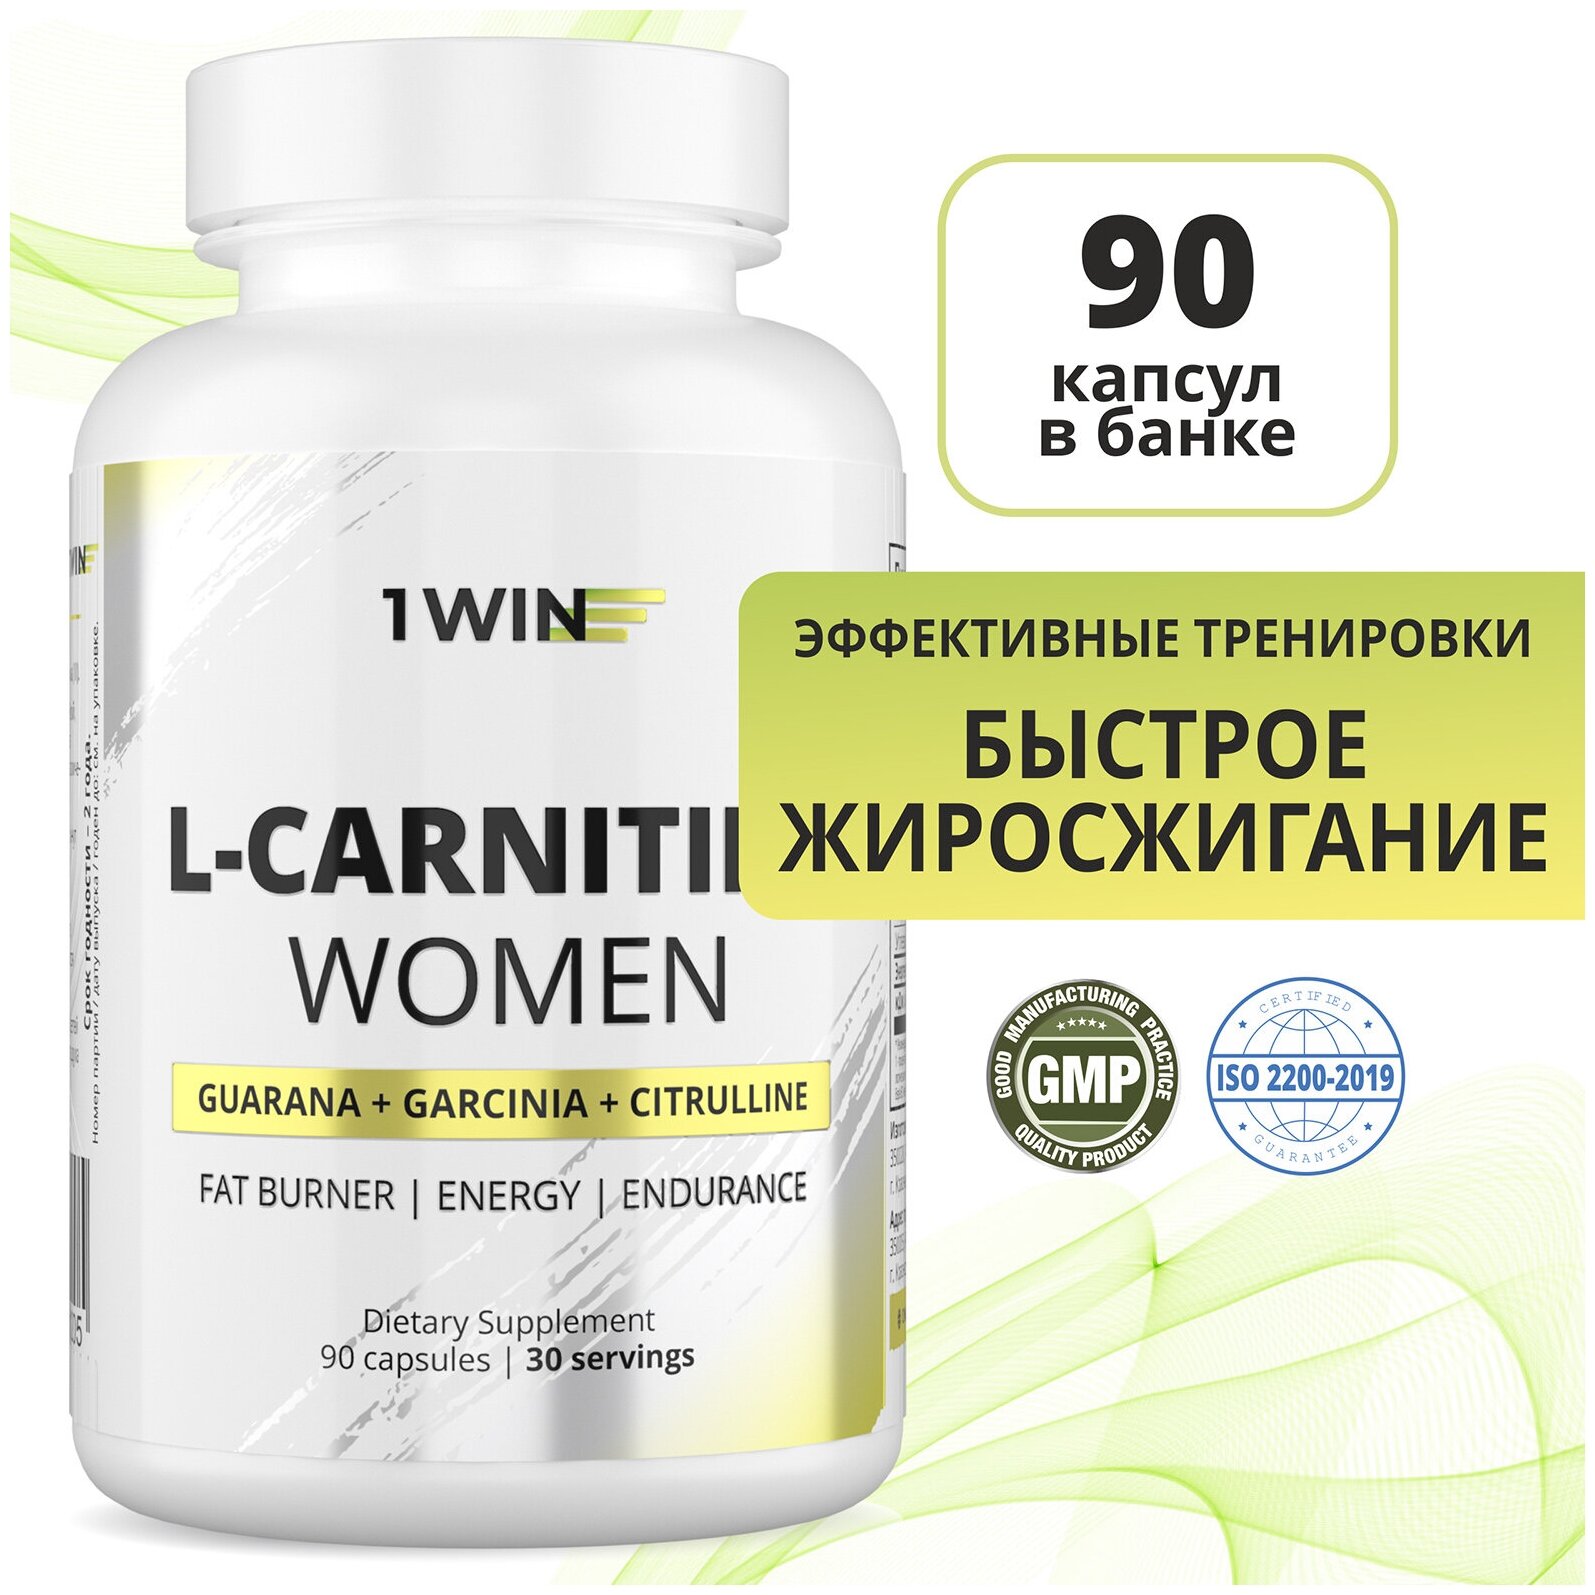 1WIN L-Carnitine WOMEN Л карнитин тартрат жиросжигатель энергетик для женщин 90 капсул